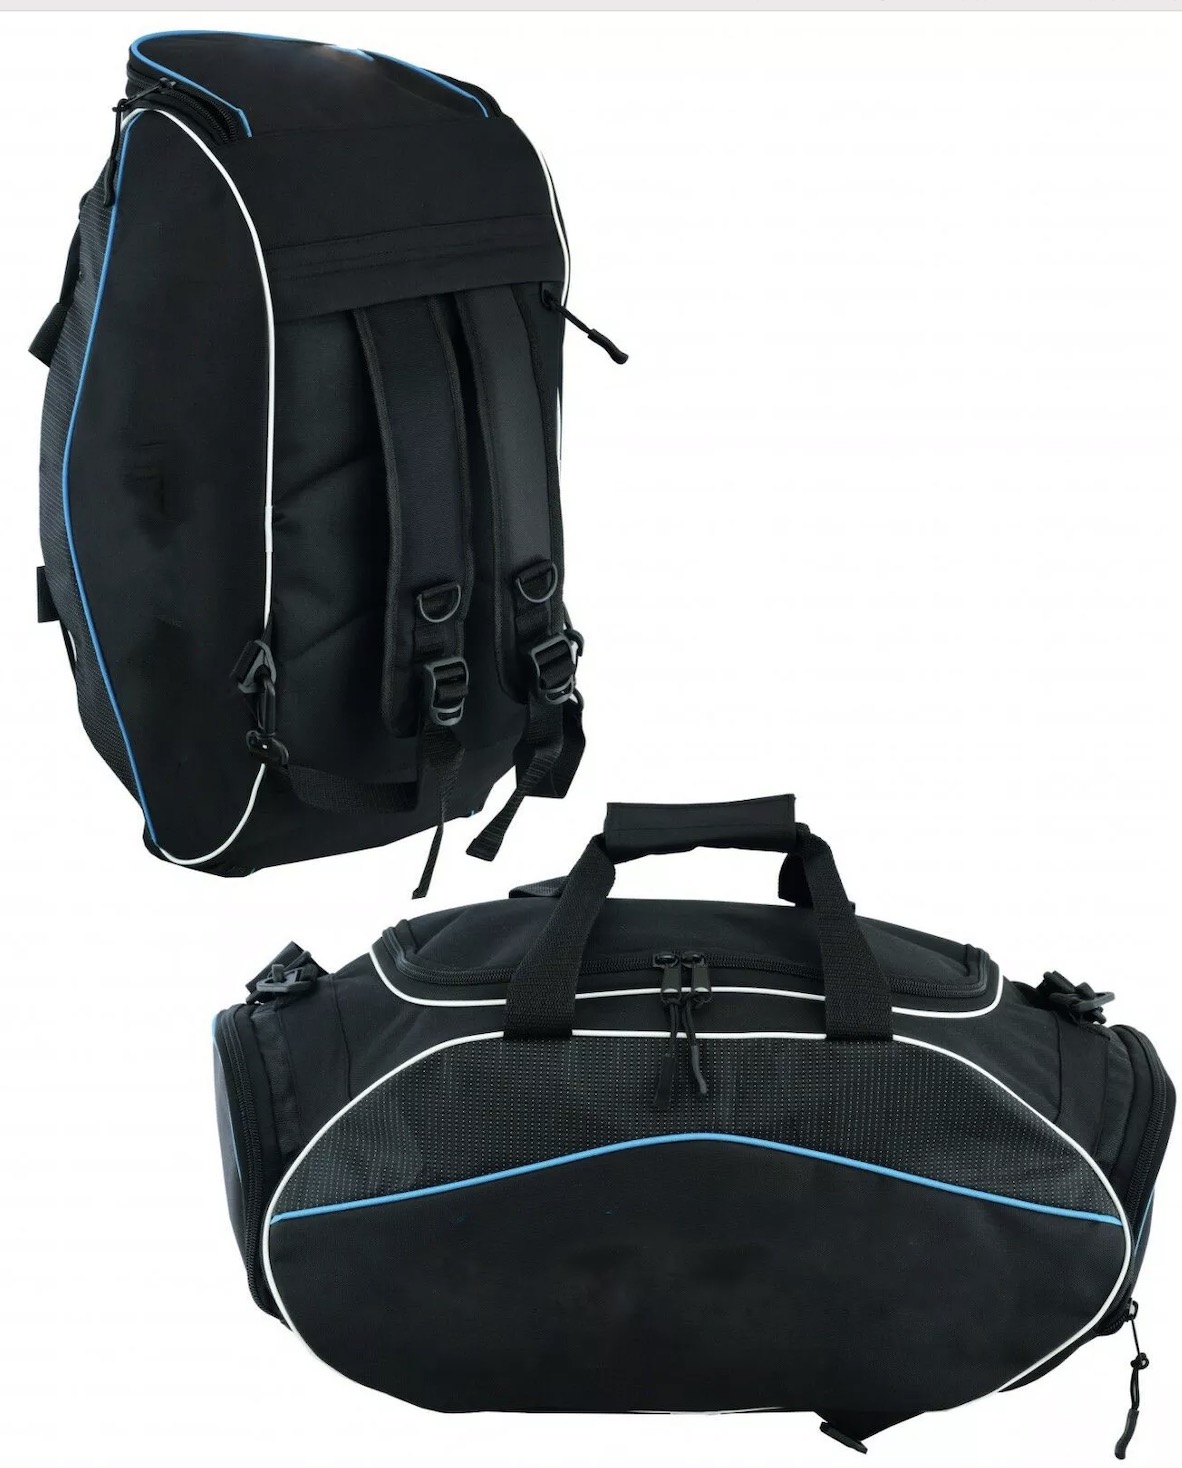 Gym Sports kit bag backpack Boxing Football Tennis Duffel sport gym backpack bag